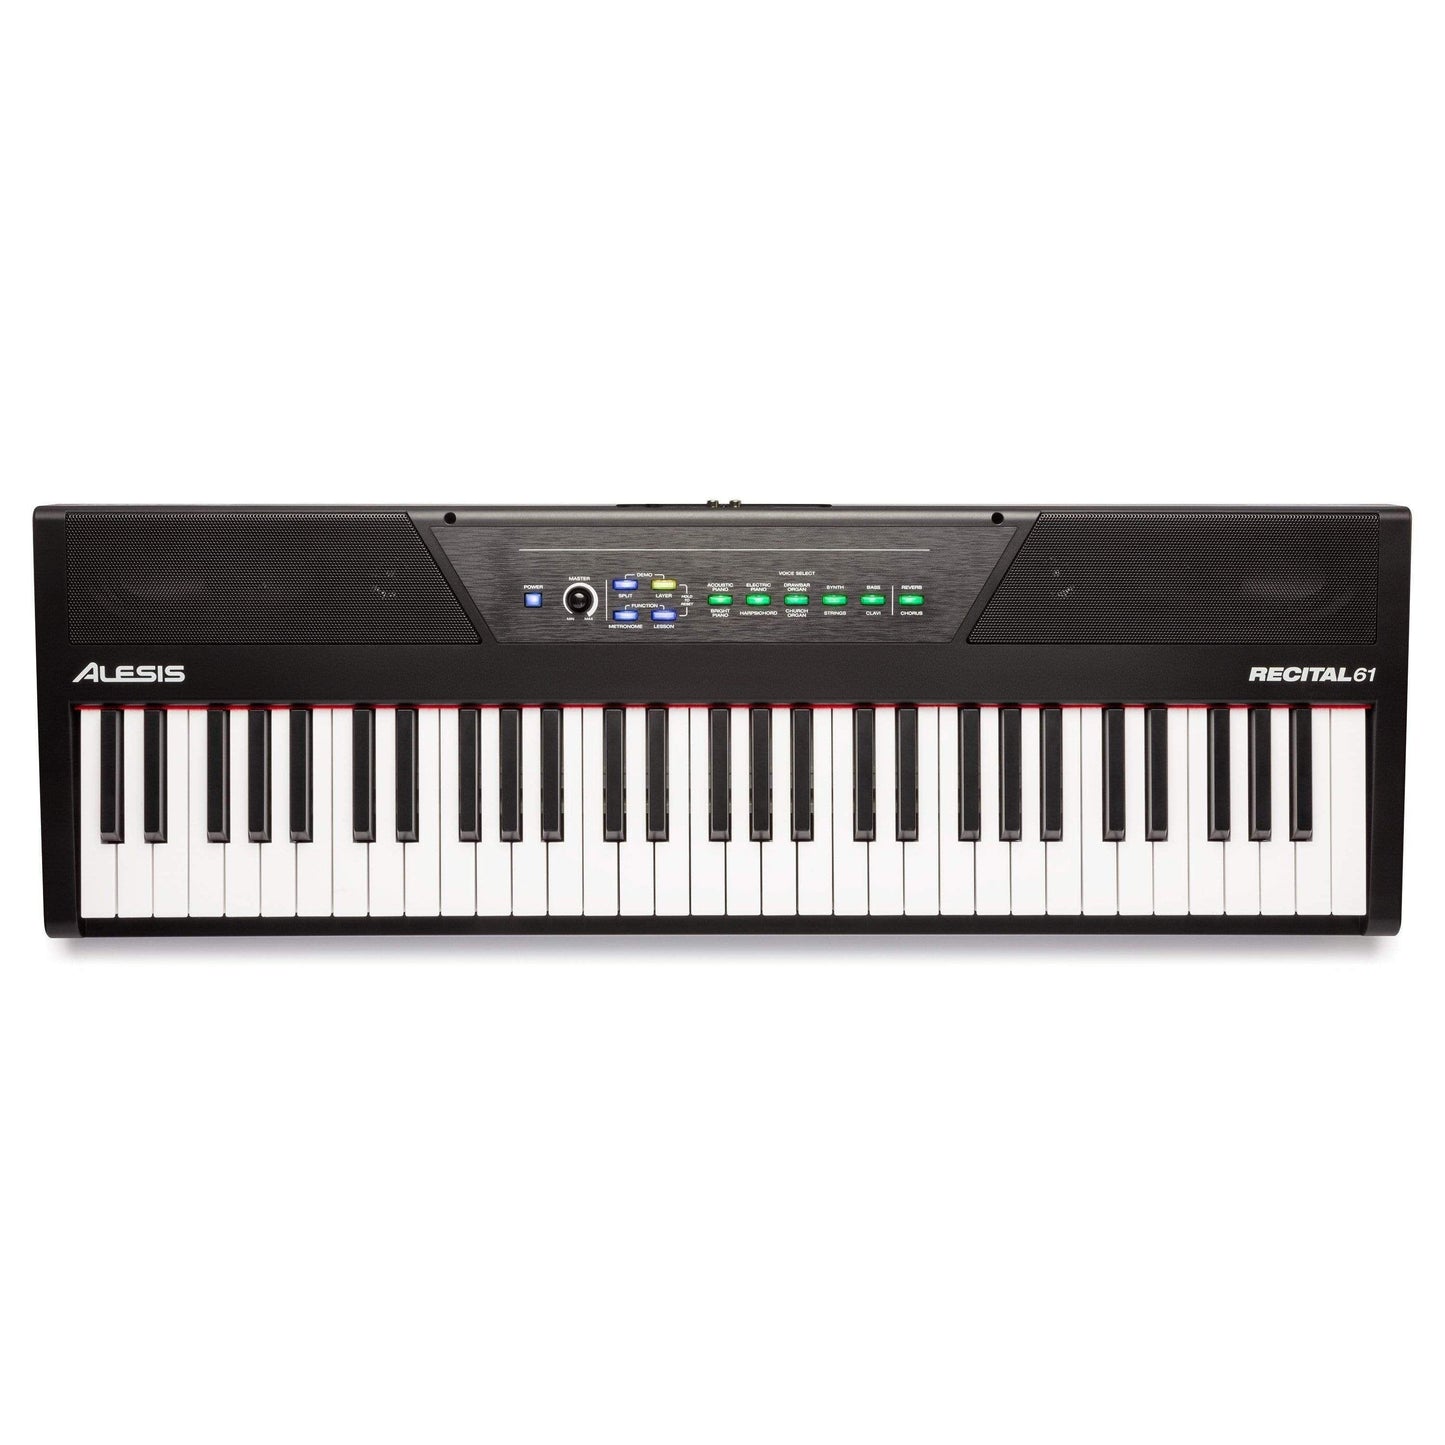 Alesis Recital 61 - 61-Key Digital Piano with Full-Sized Keys